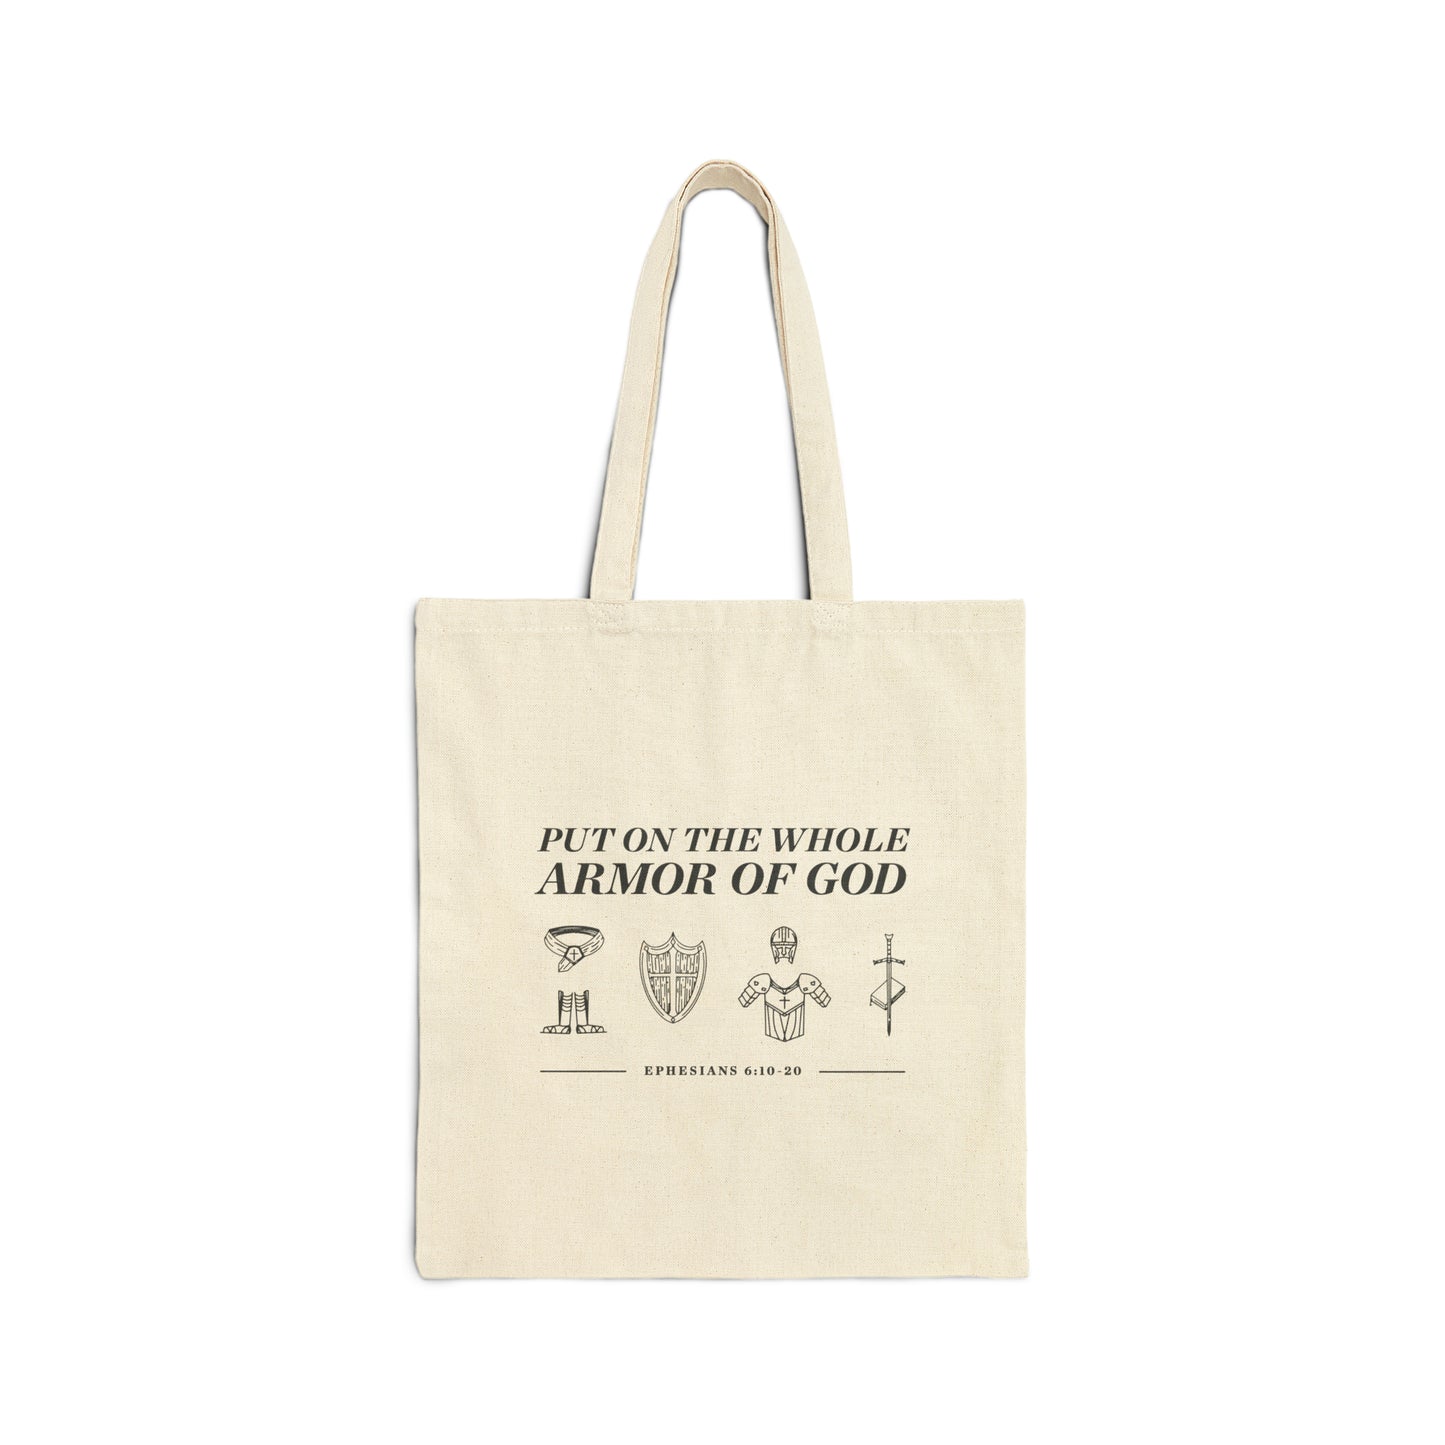 Armor of God Tote Bag